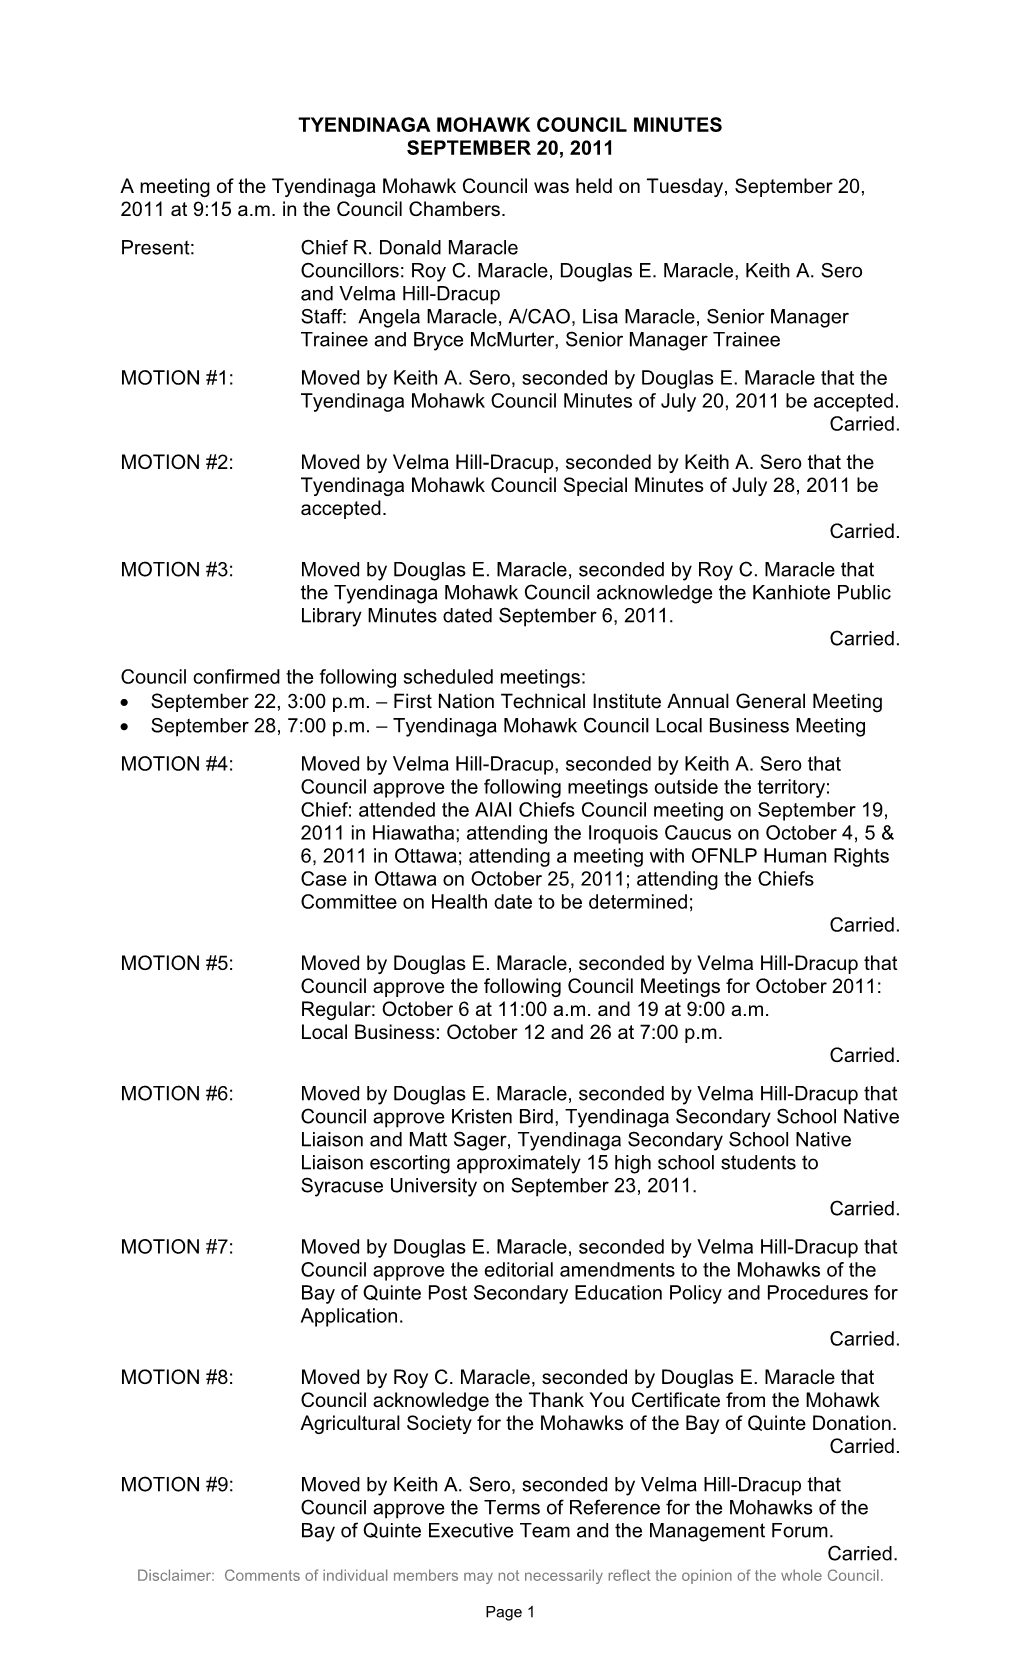 Tyendinaga Mohawk Council Minutes September 20, 2011 A